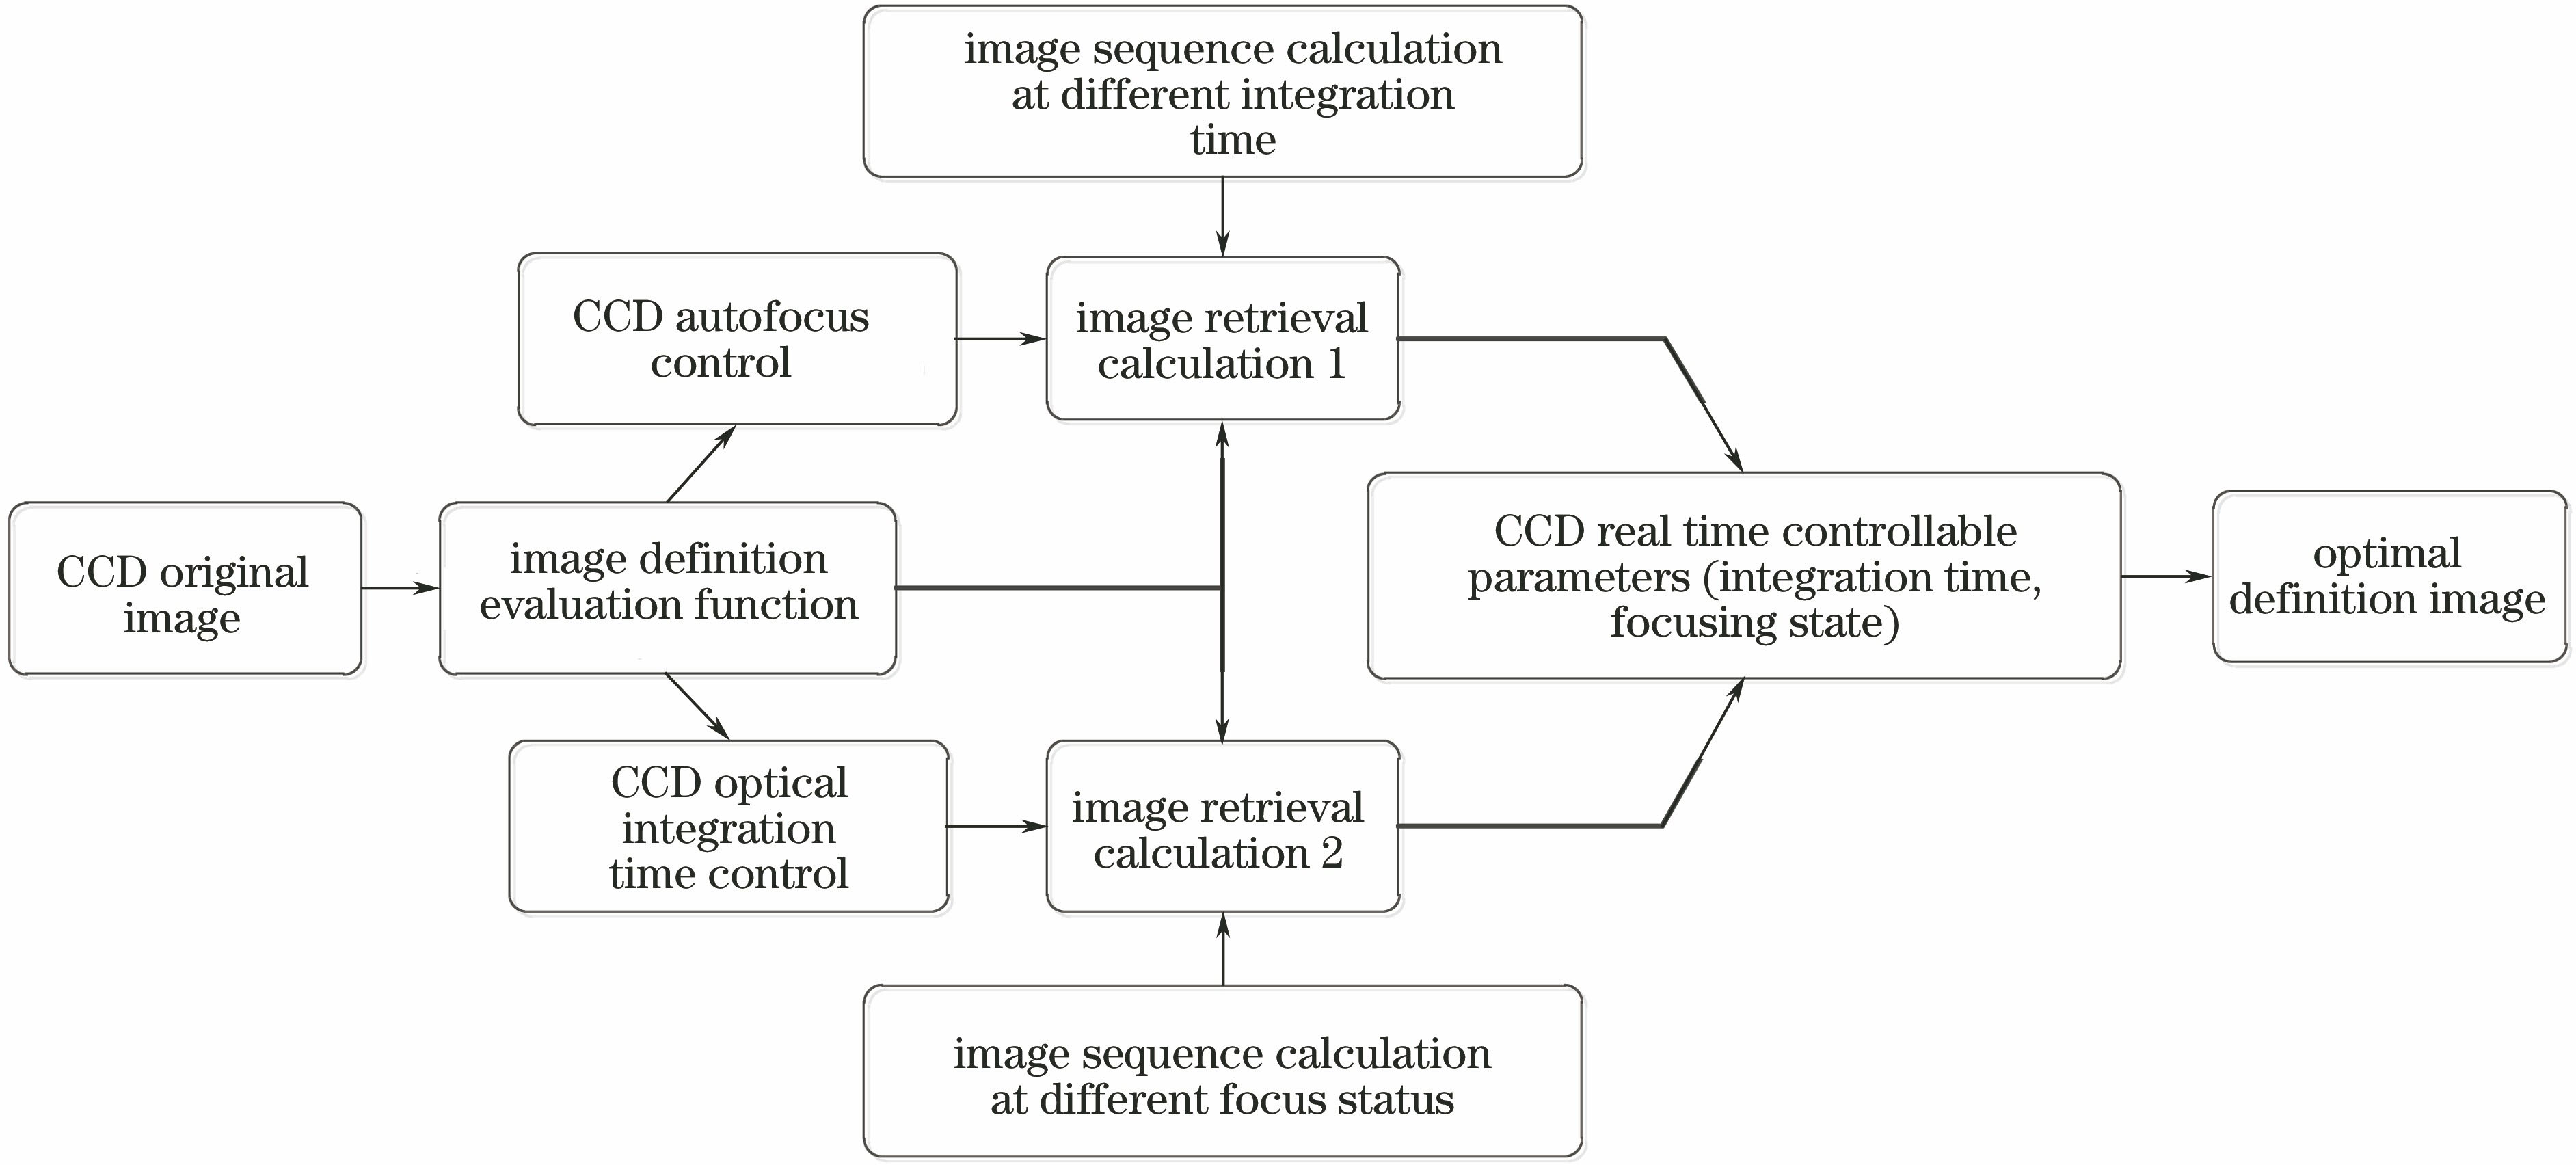 Method for determining best image definition